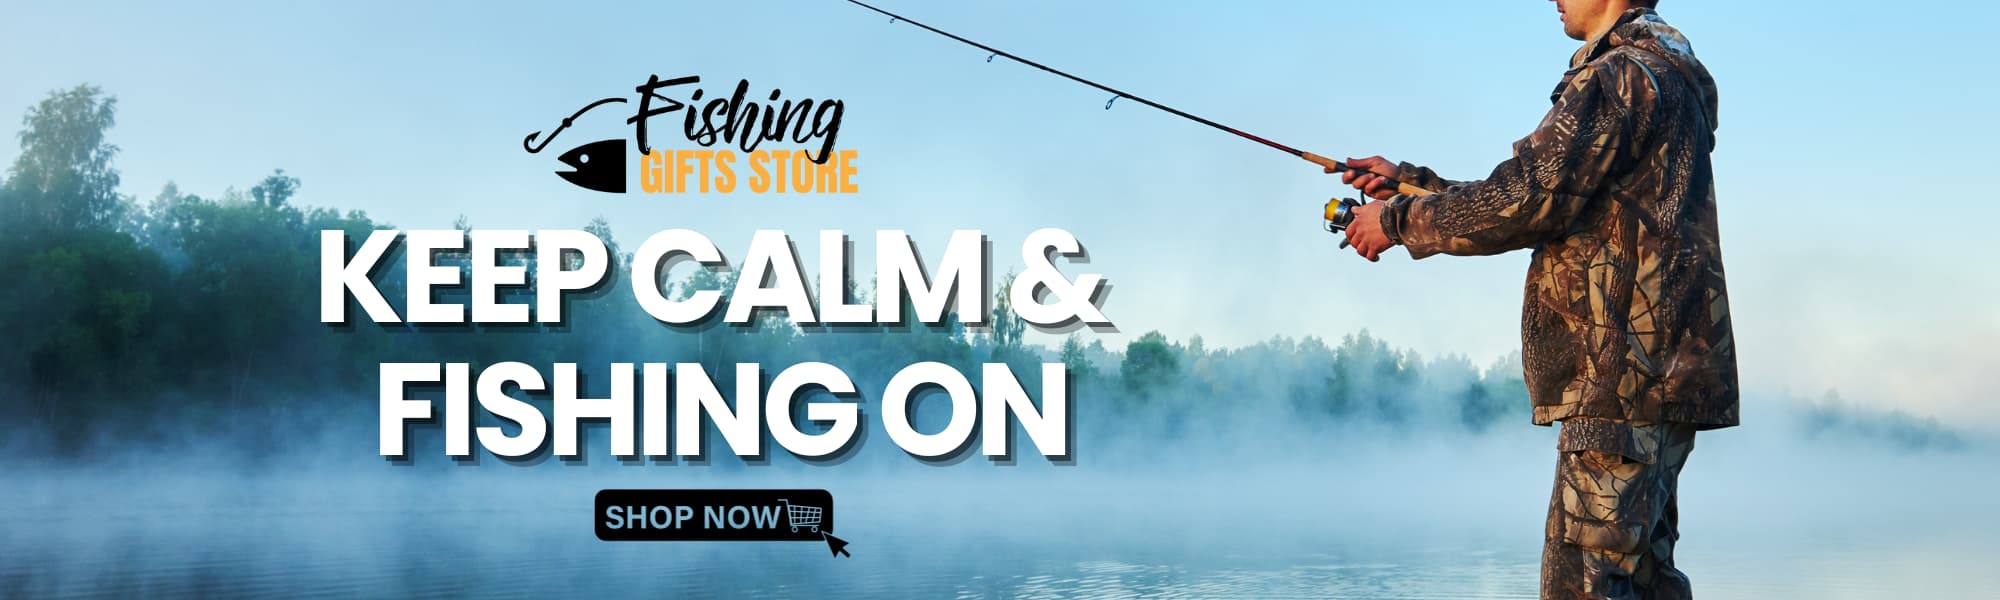 fishing banner